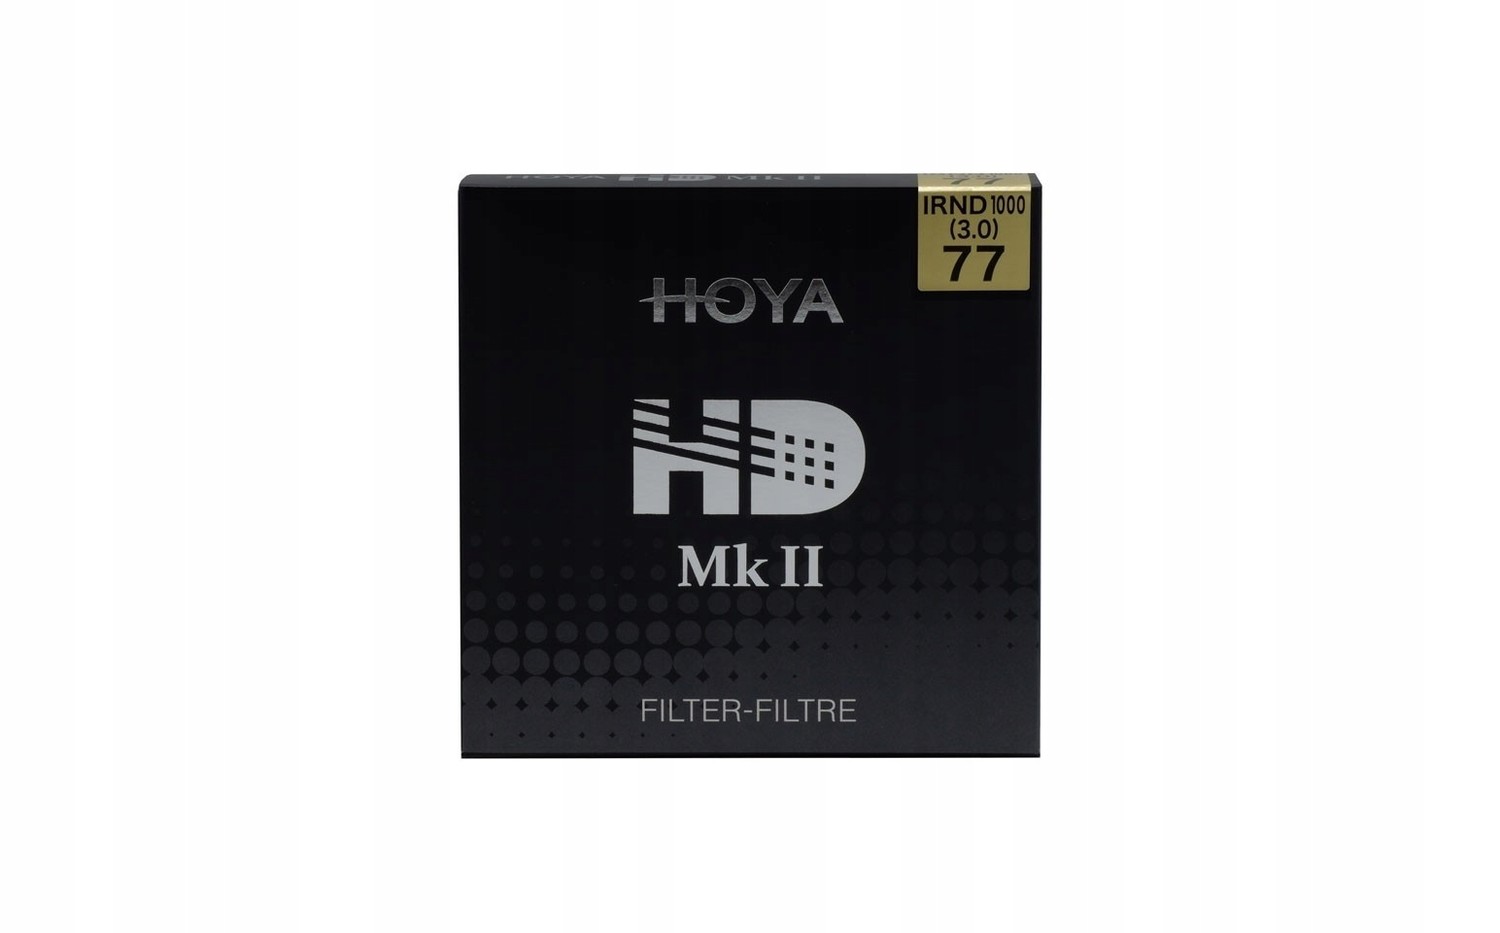 Filtr Hoya Hd MkII IRND1000 (3.0) 52mm